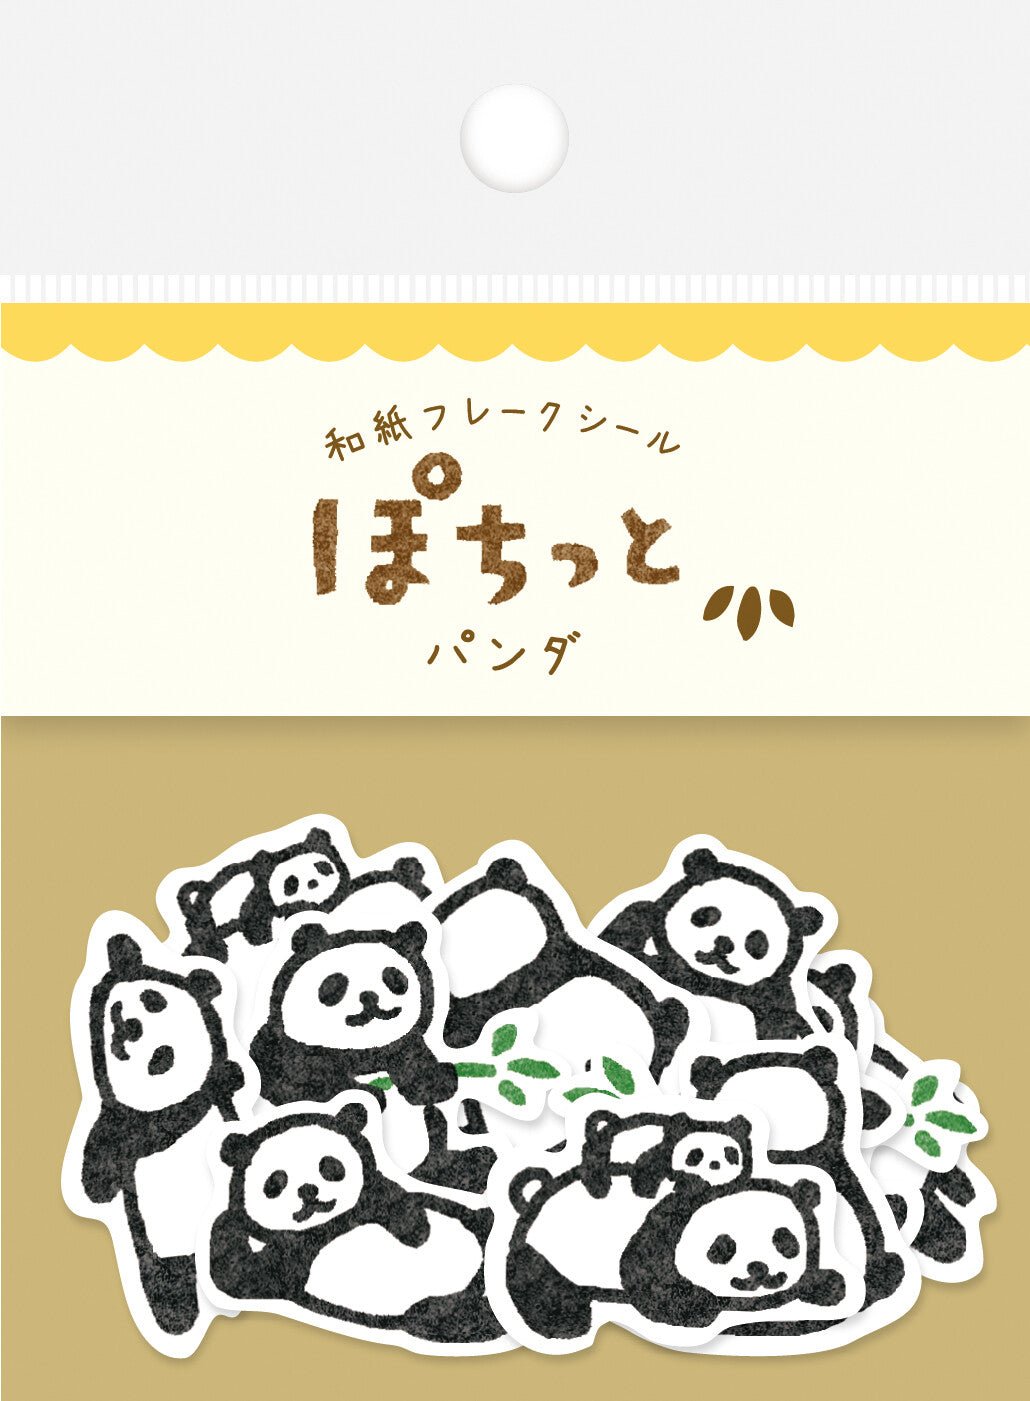 "Panda" Sticker Flakes - Rosey’s Kawaii Shop